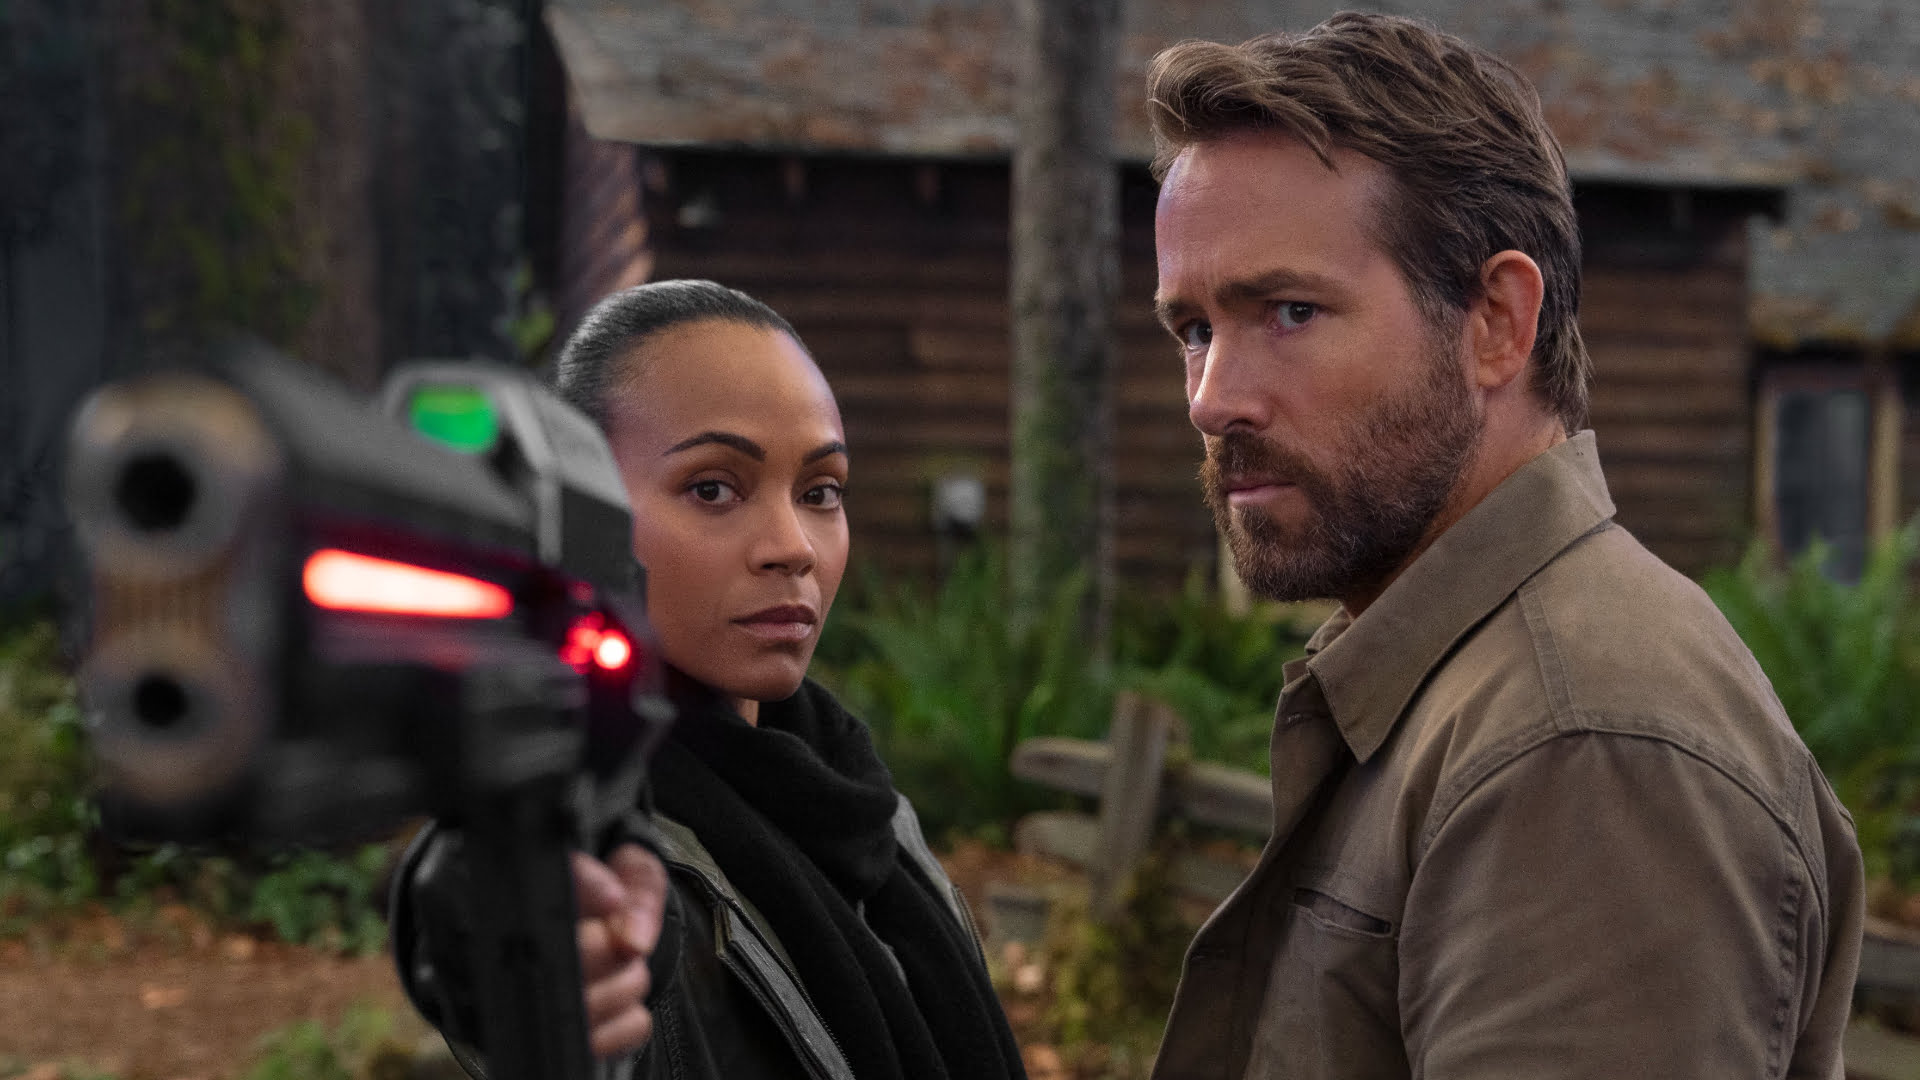 Netflix sends Ryan Reynolds through time in this sci-fi thriller